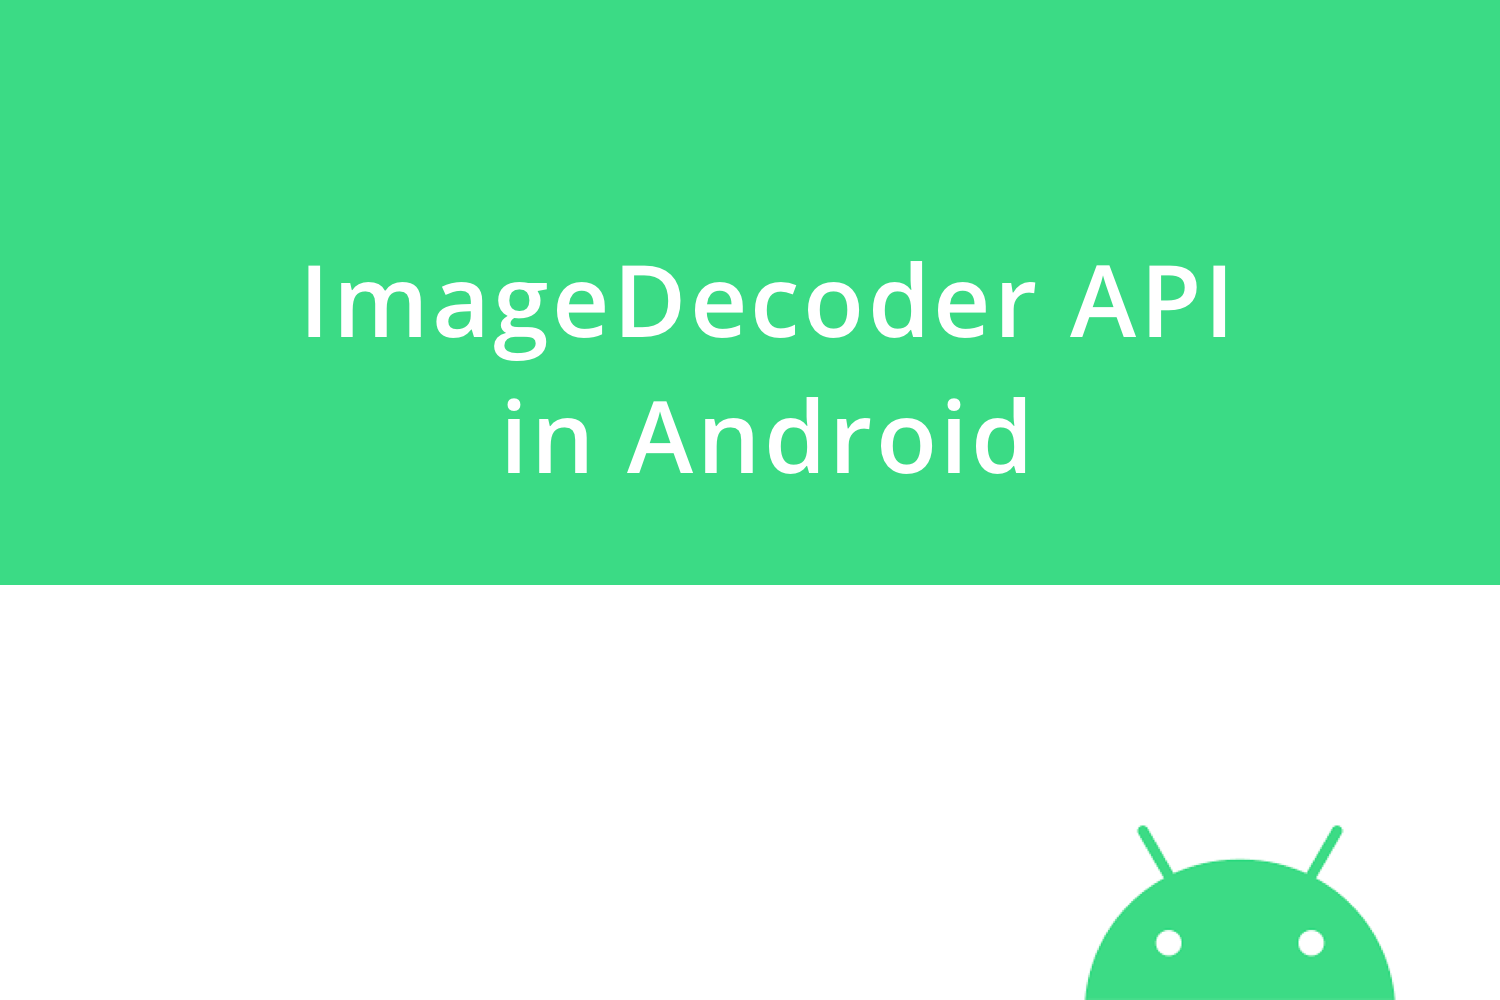 Understanding ImageDecoder API in Android